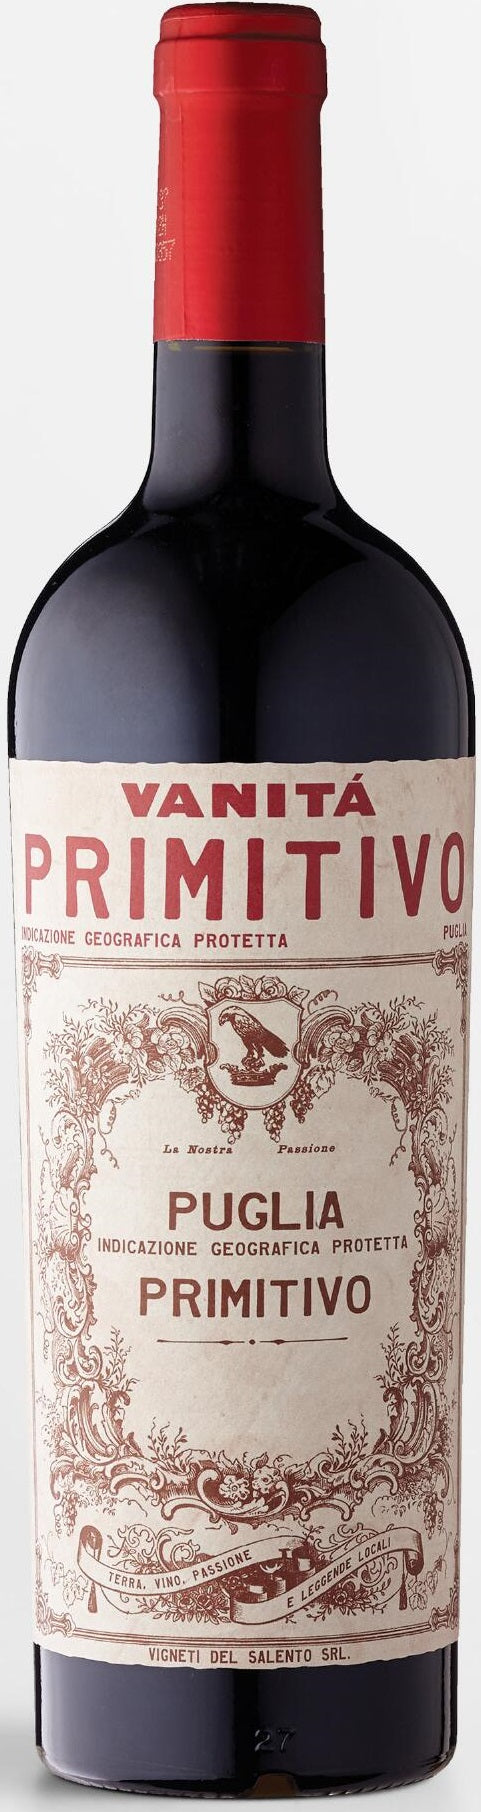 Vanita Primitivo 2017